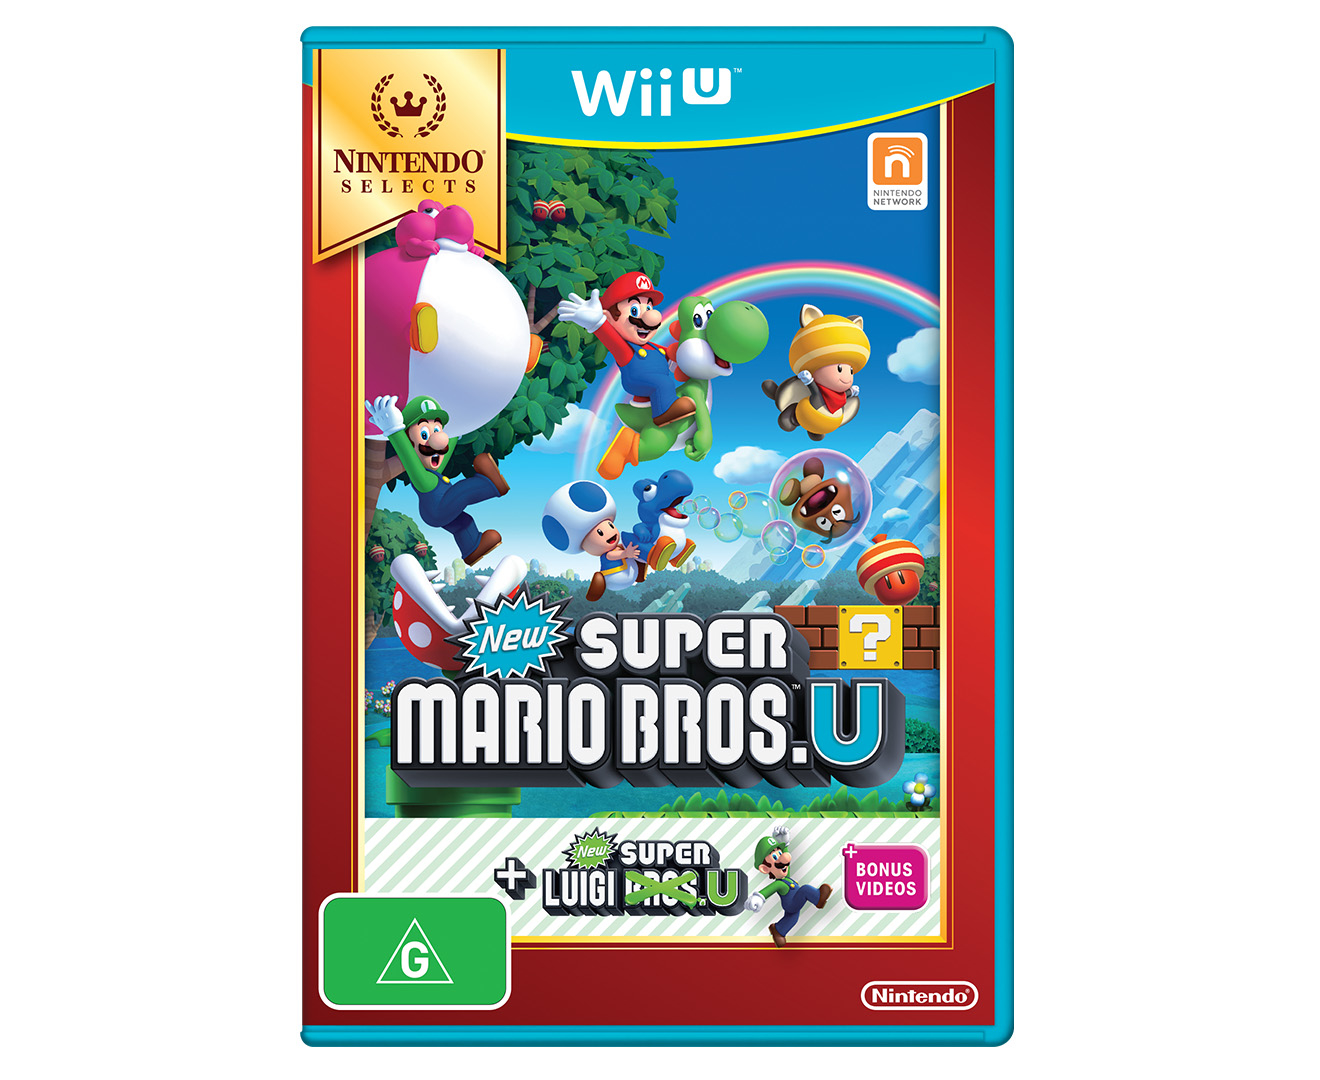 Nintendo Wii U Selects: New Super Mario Bros U + Luigi U Game Bundle